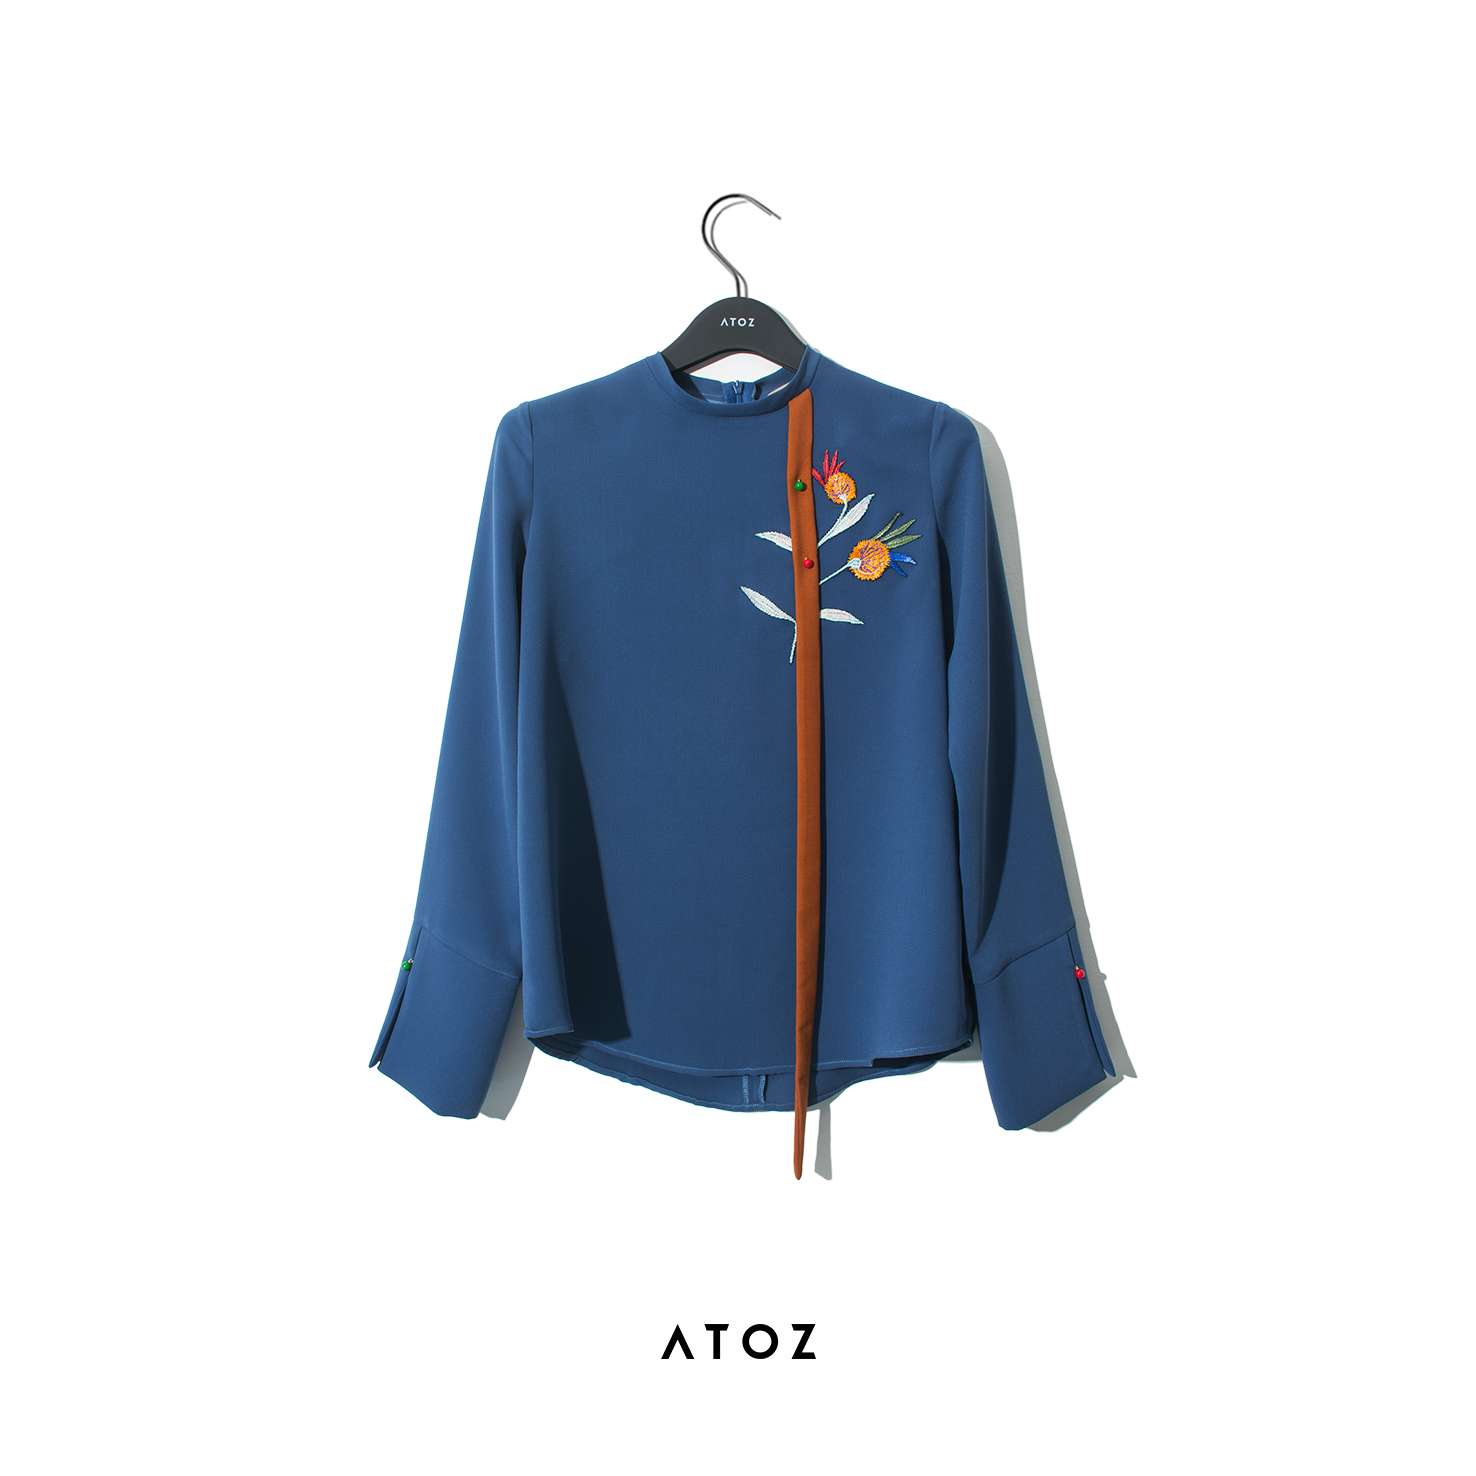 ATOZ - Mongolian Fashion design